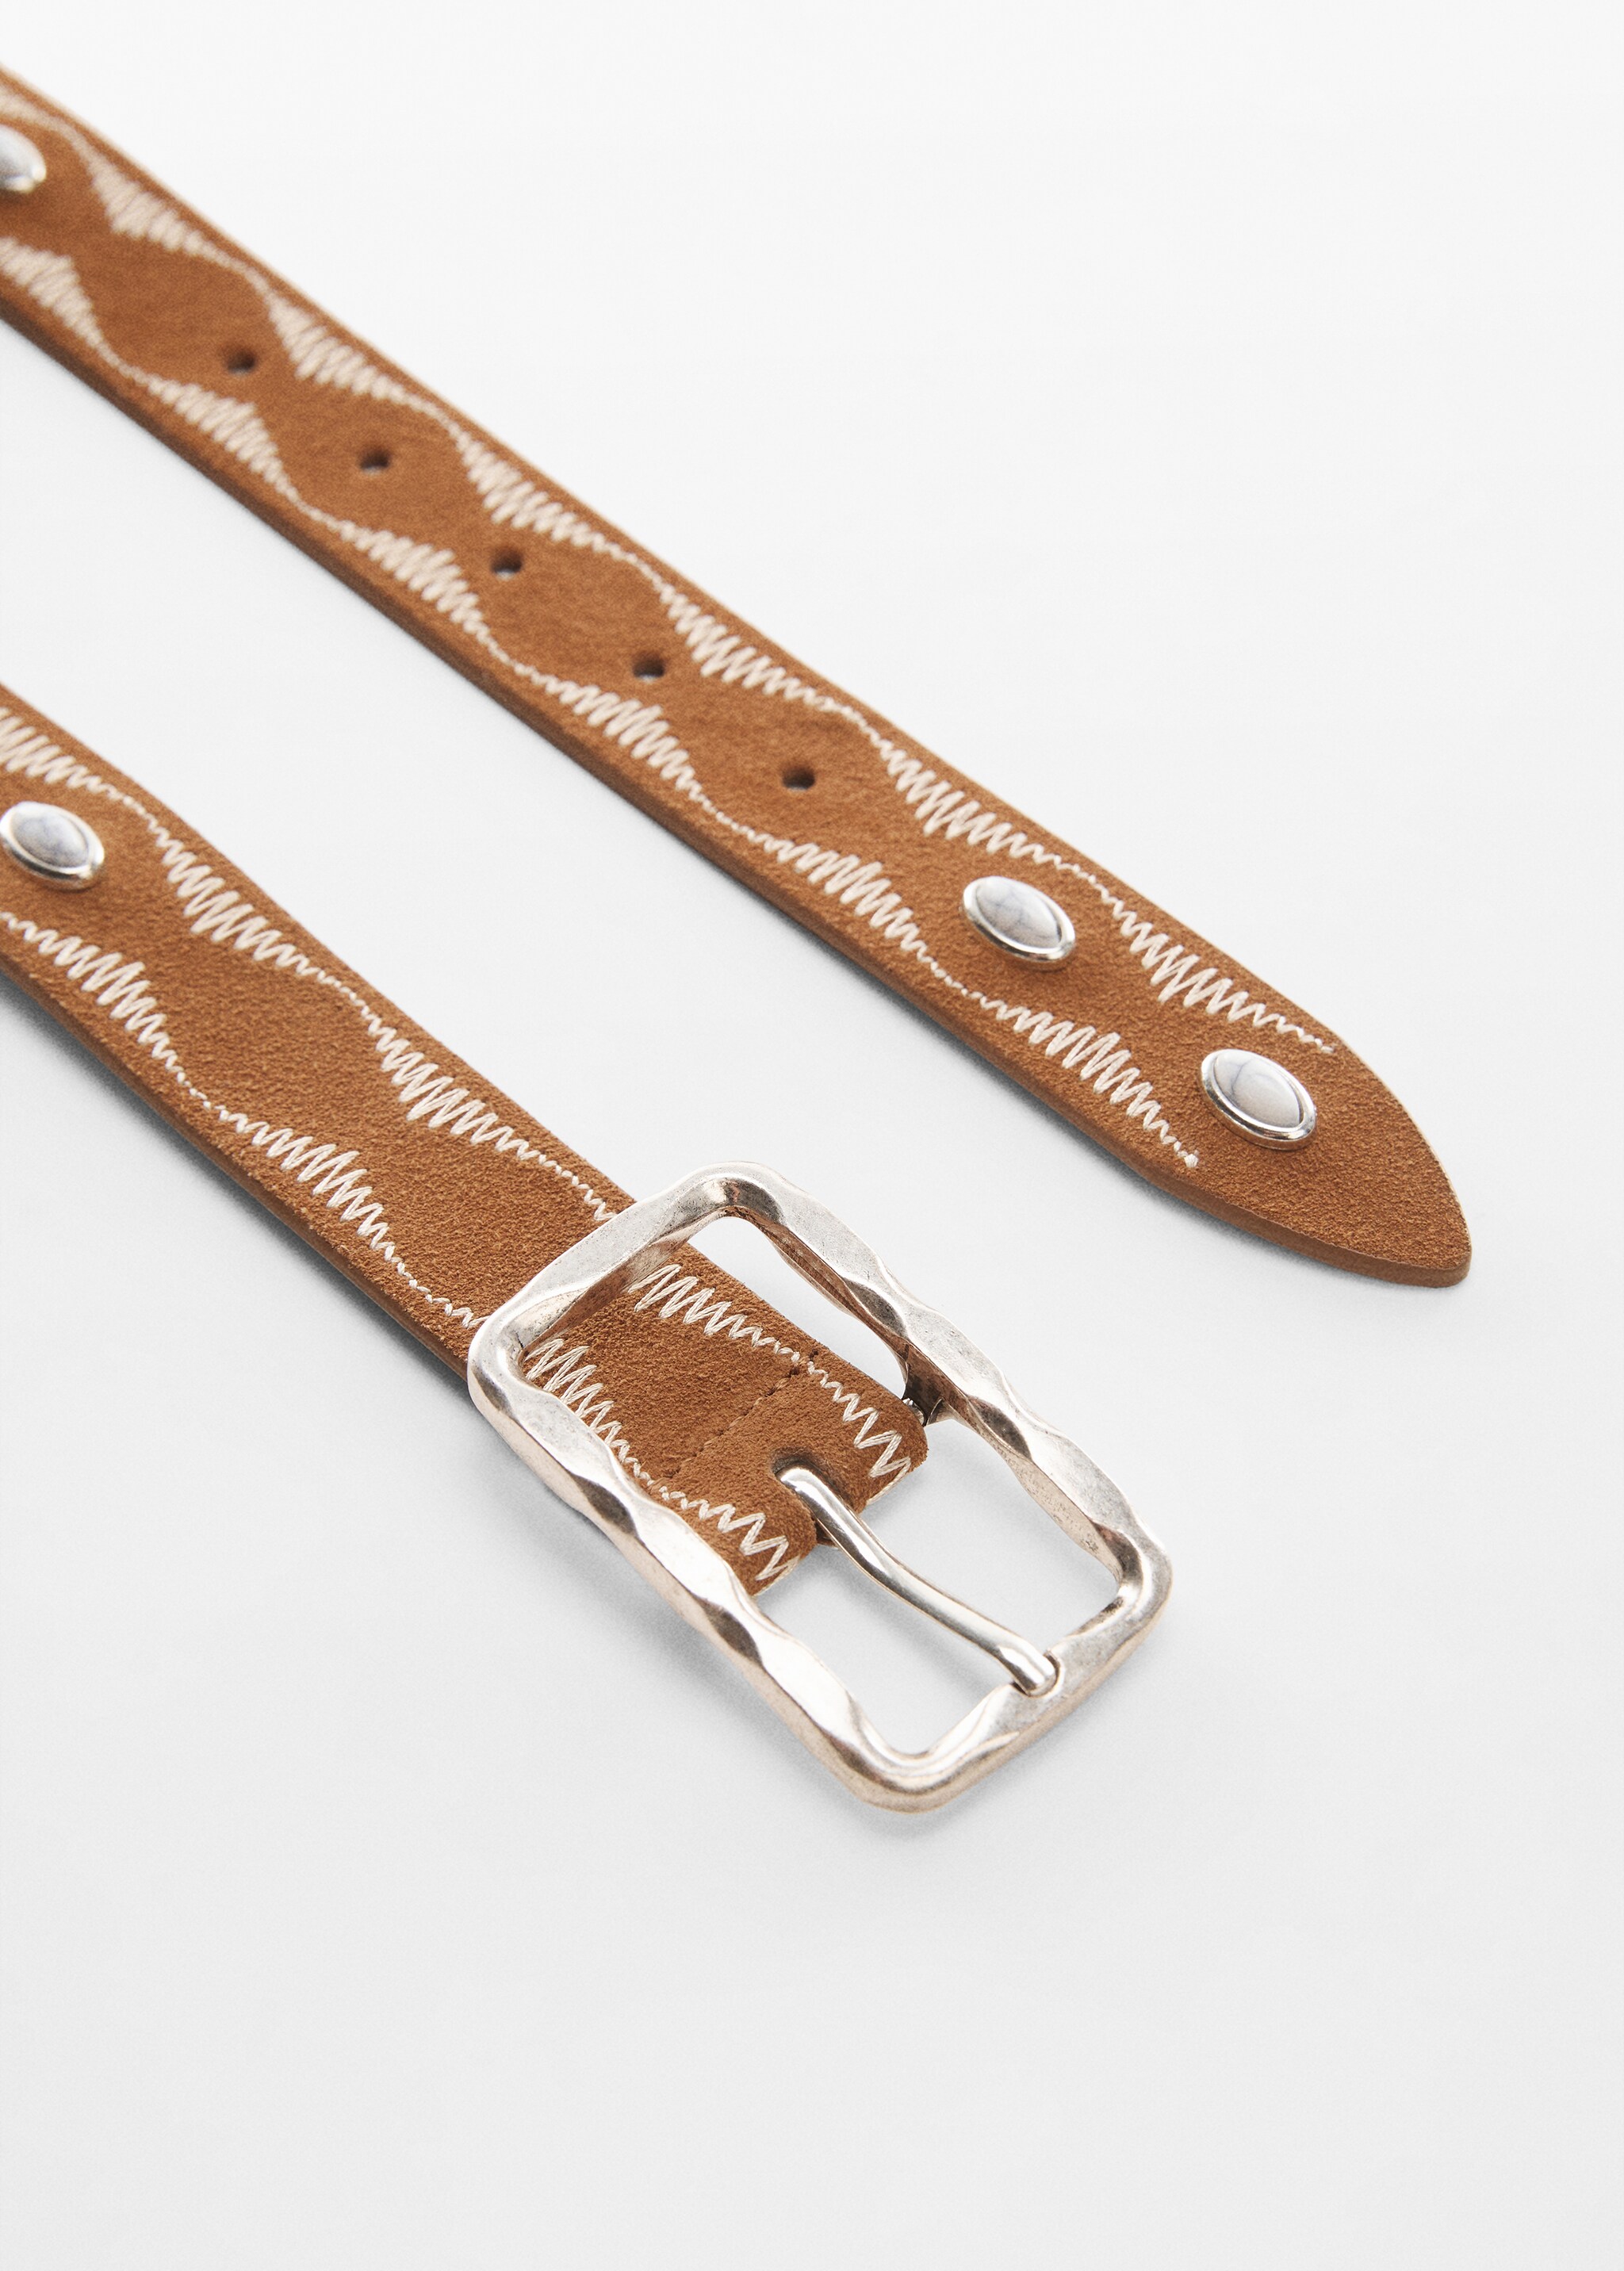 Embroidered leather belt - Medium plane